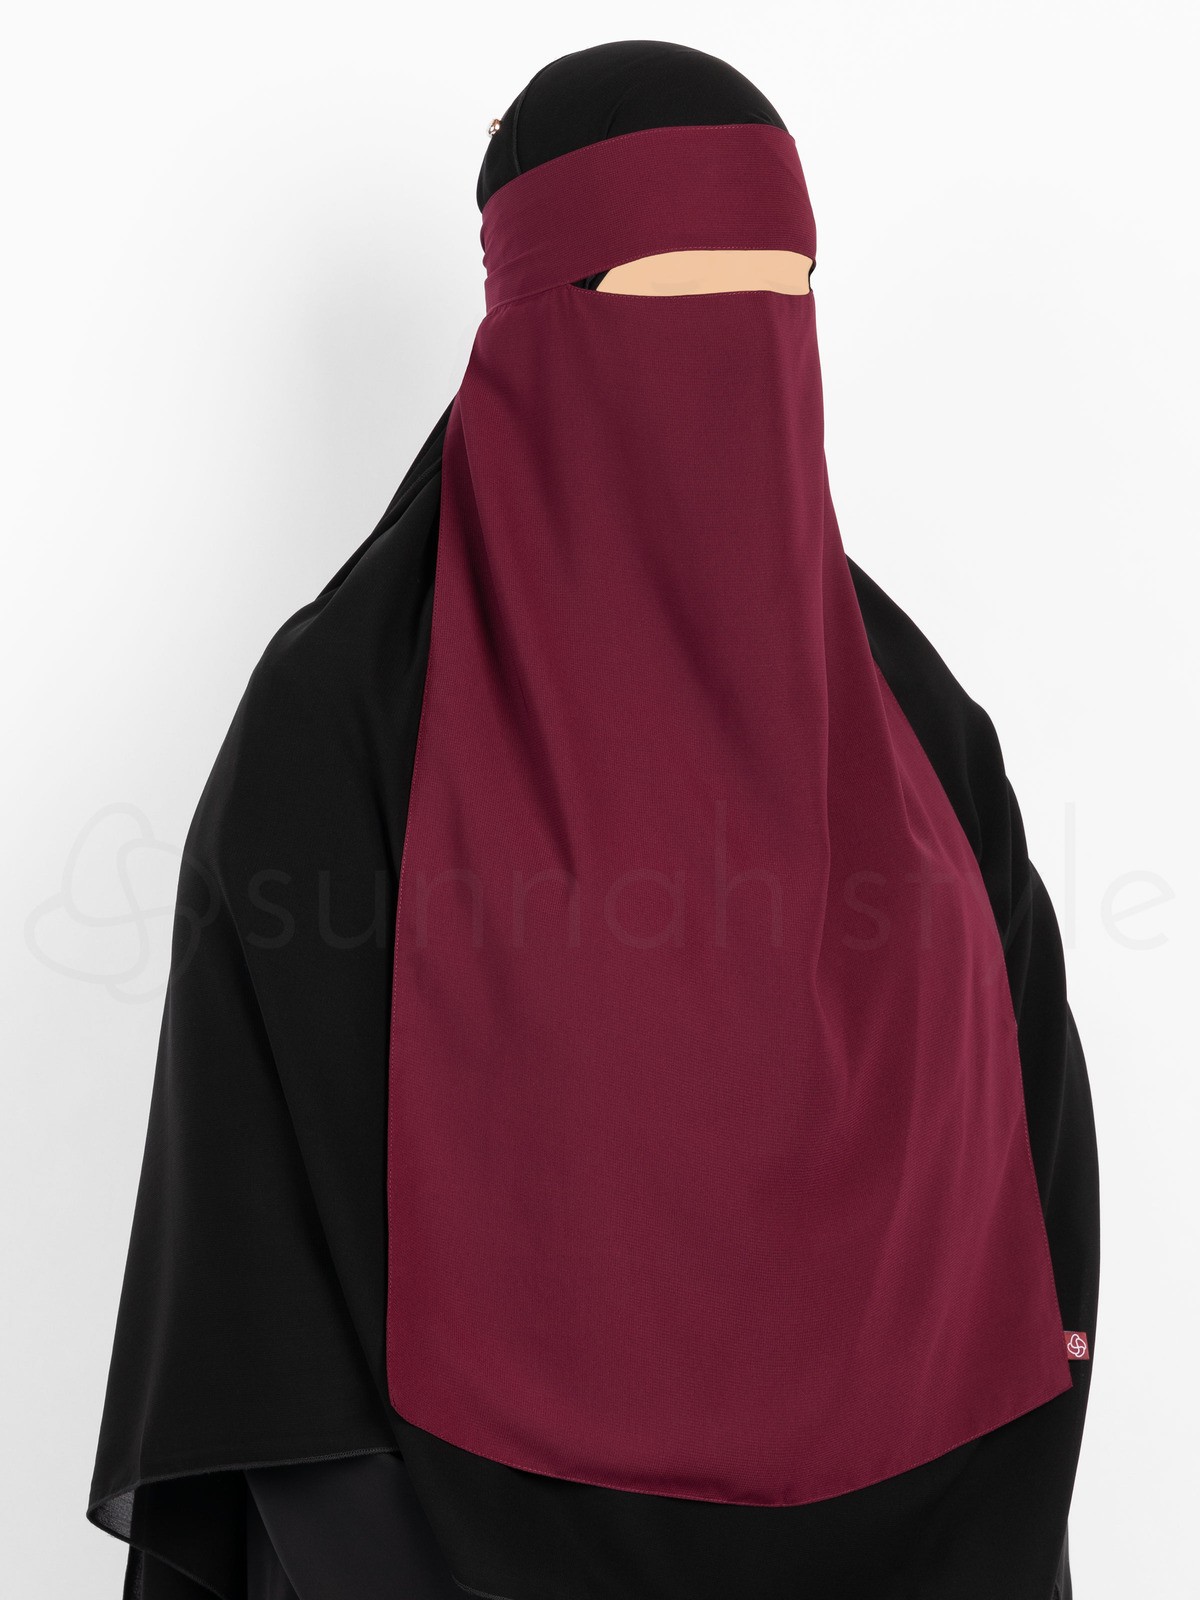 Sunnah Style - Long One Layer Niqab (Burgundy)